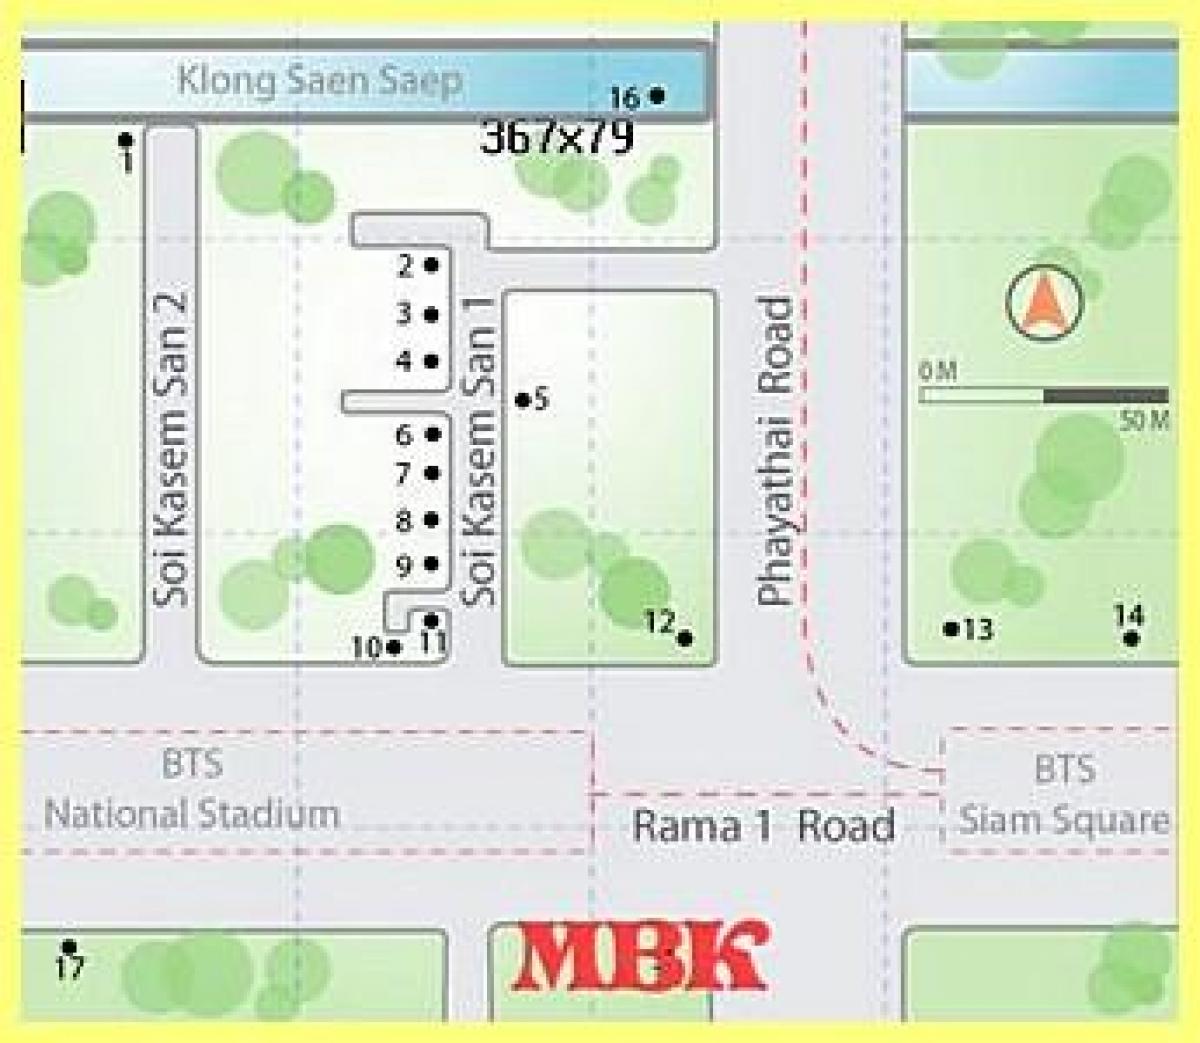 el centro comercial mbk en bangkok mapa